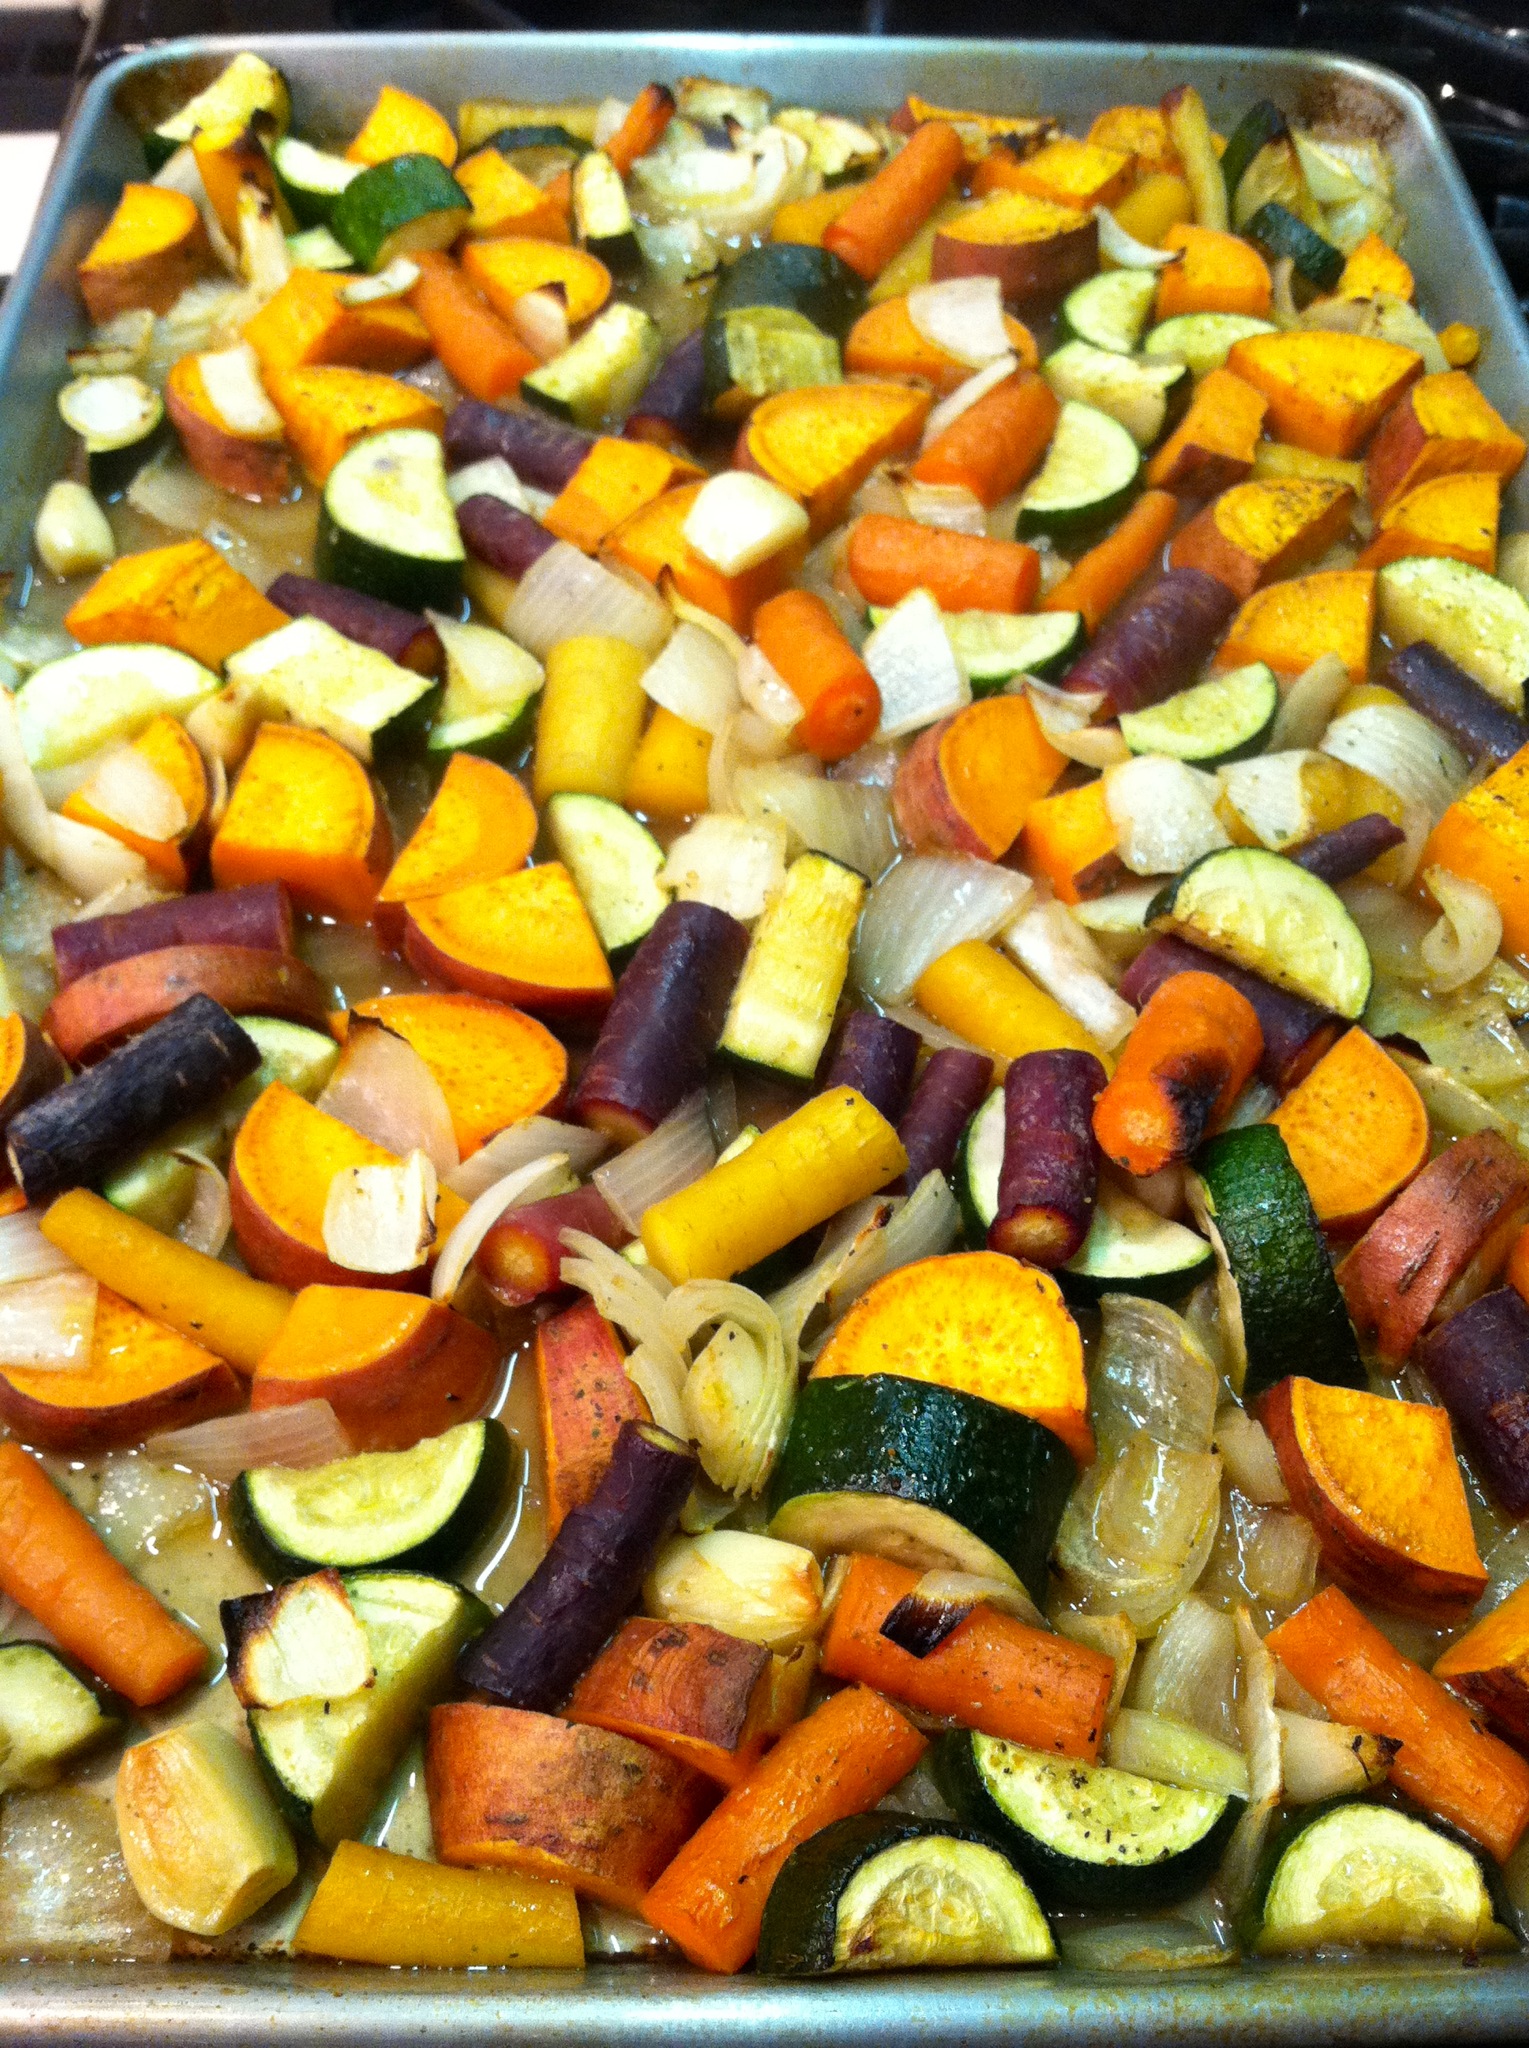 http://thehungryhusky.files.wordpress.com/2012/11/oven-roasted-vegetables.jpg